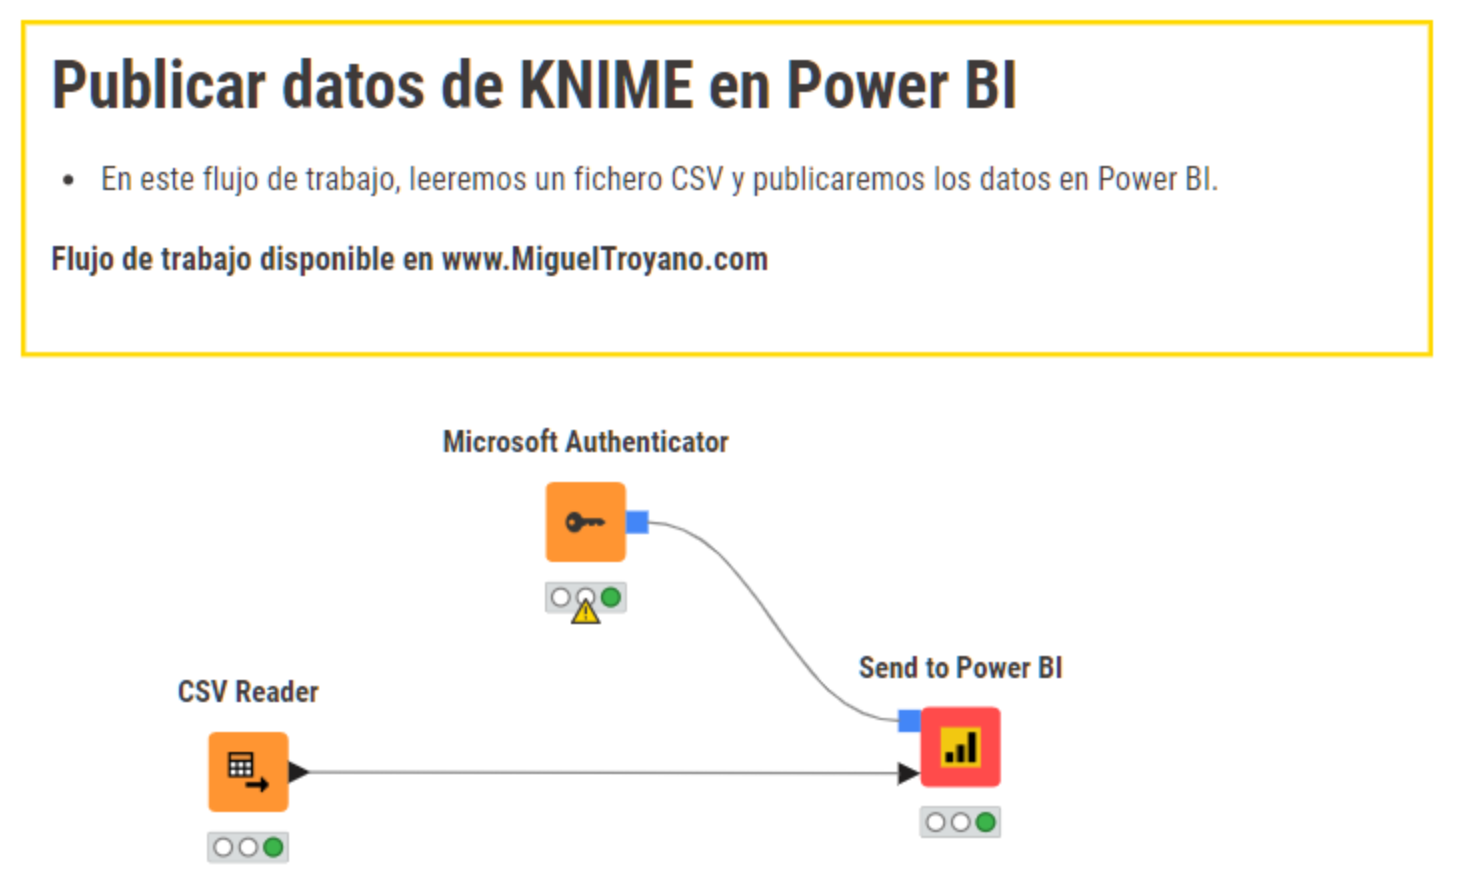 Publicar datos de KNIME en Power BI